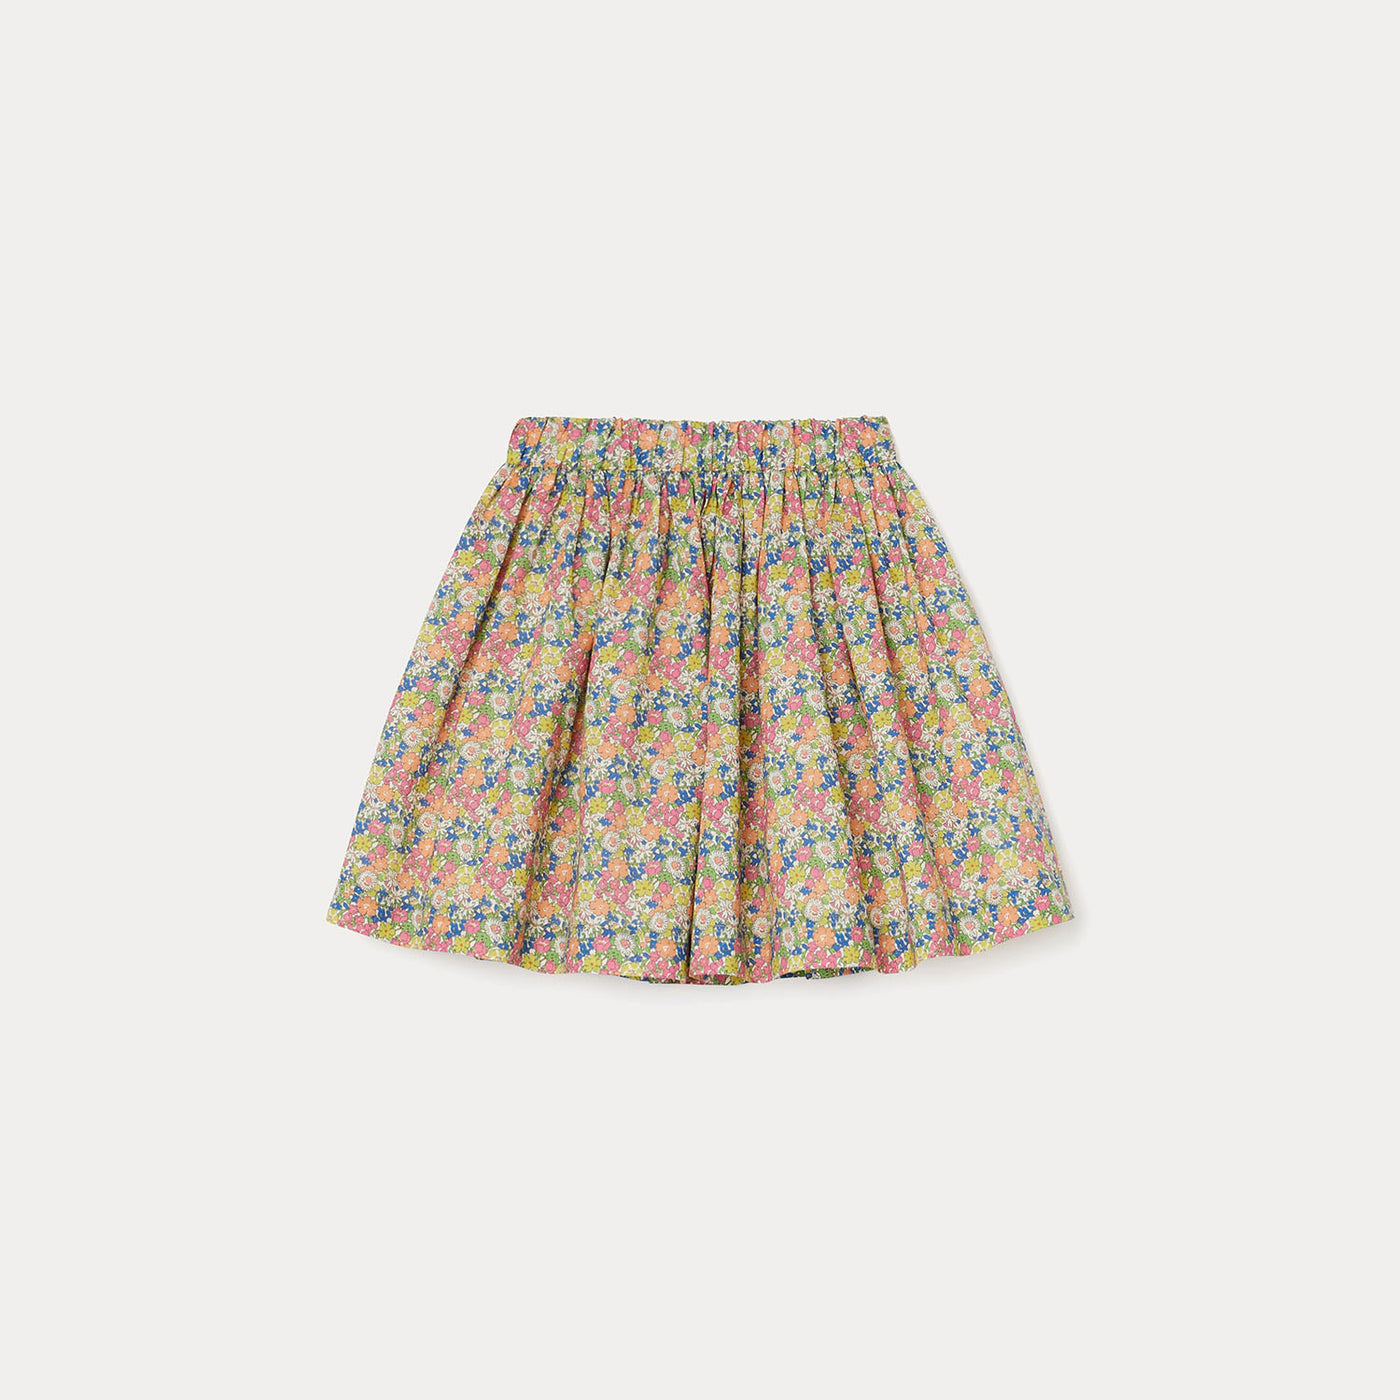 Organic Cotton Liberty Fabric Skirt for Girls multicolored